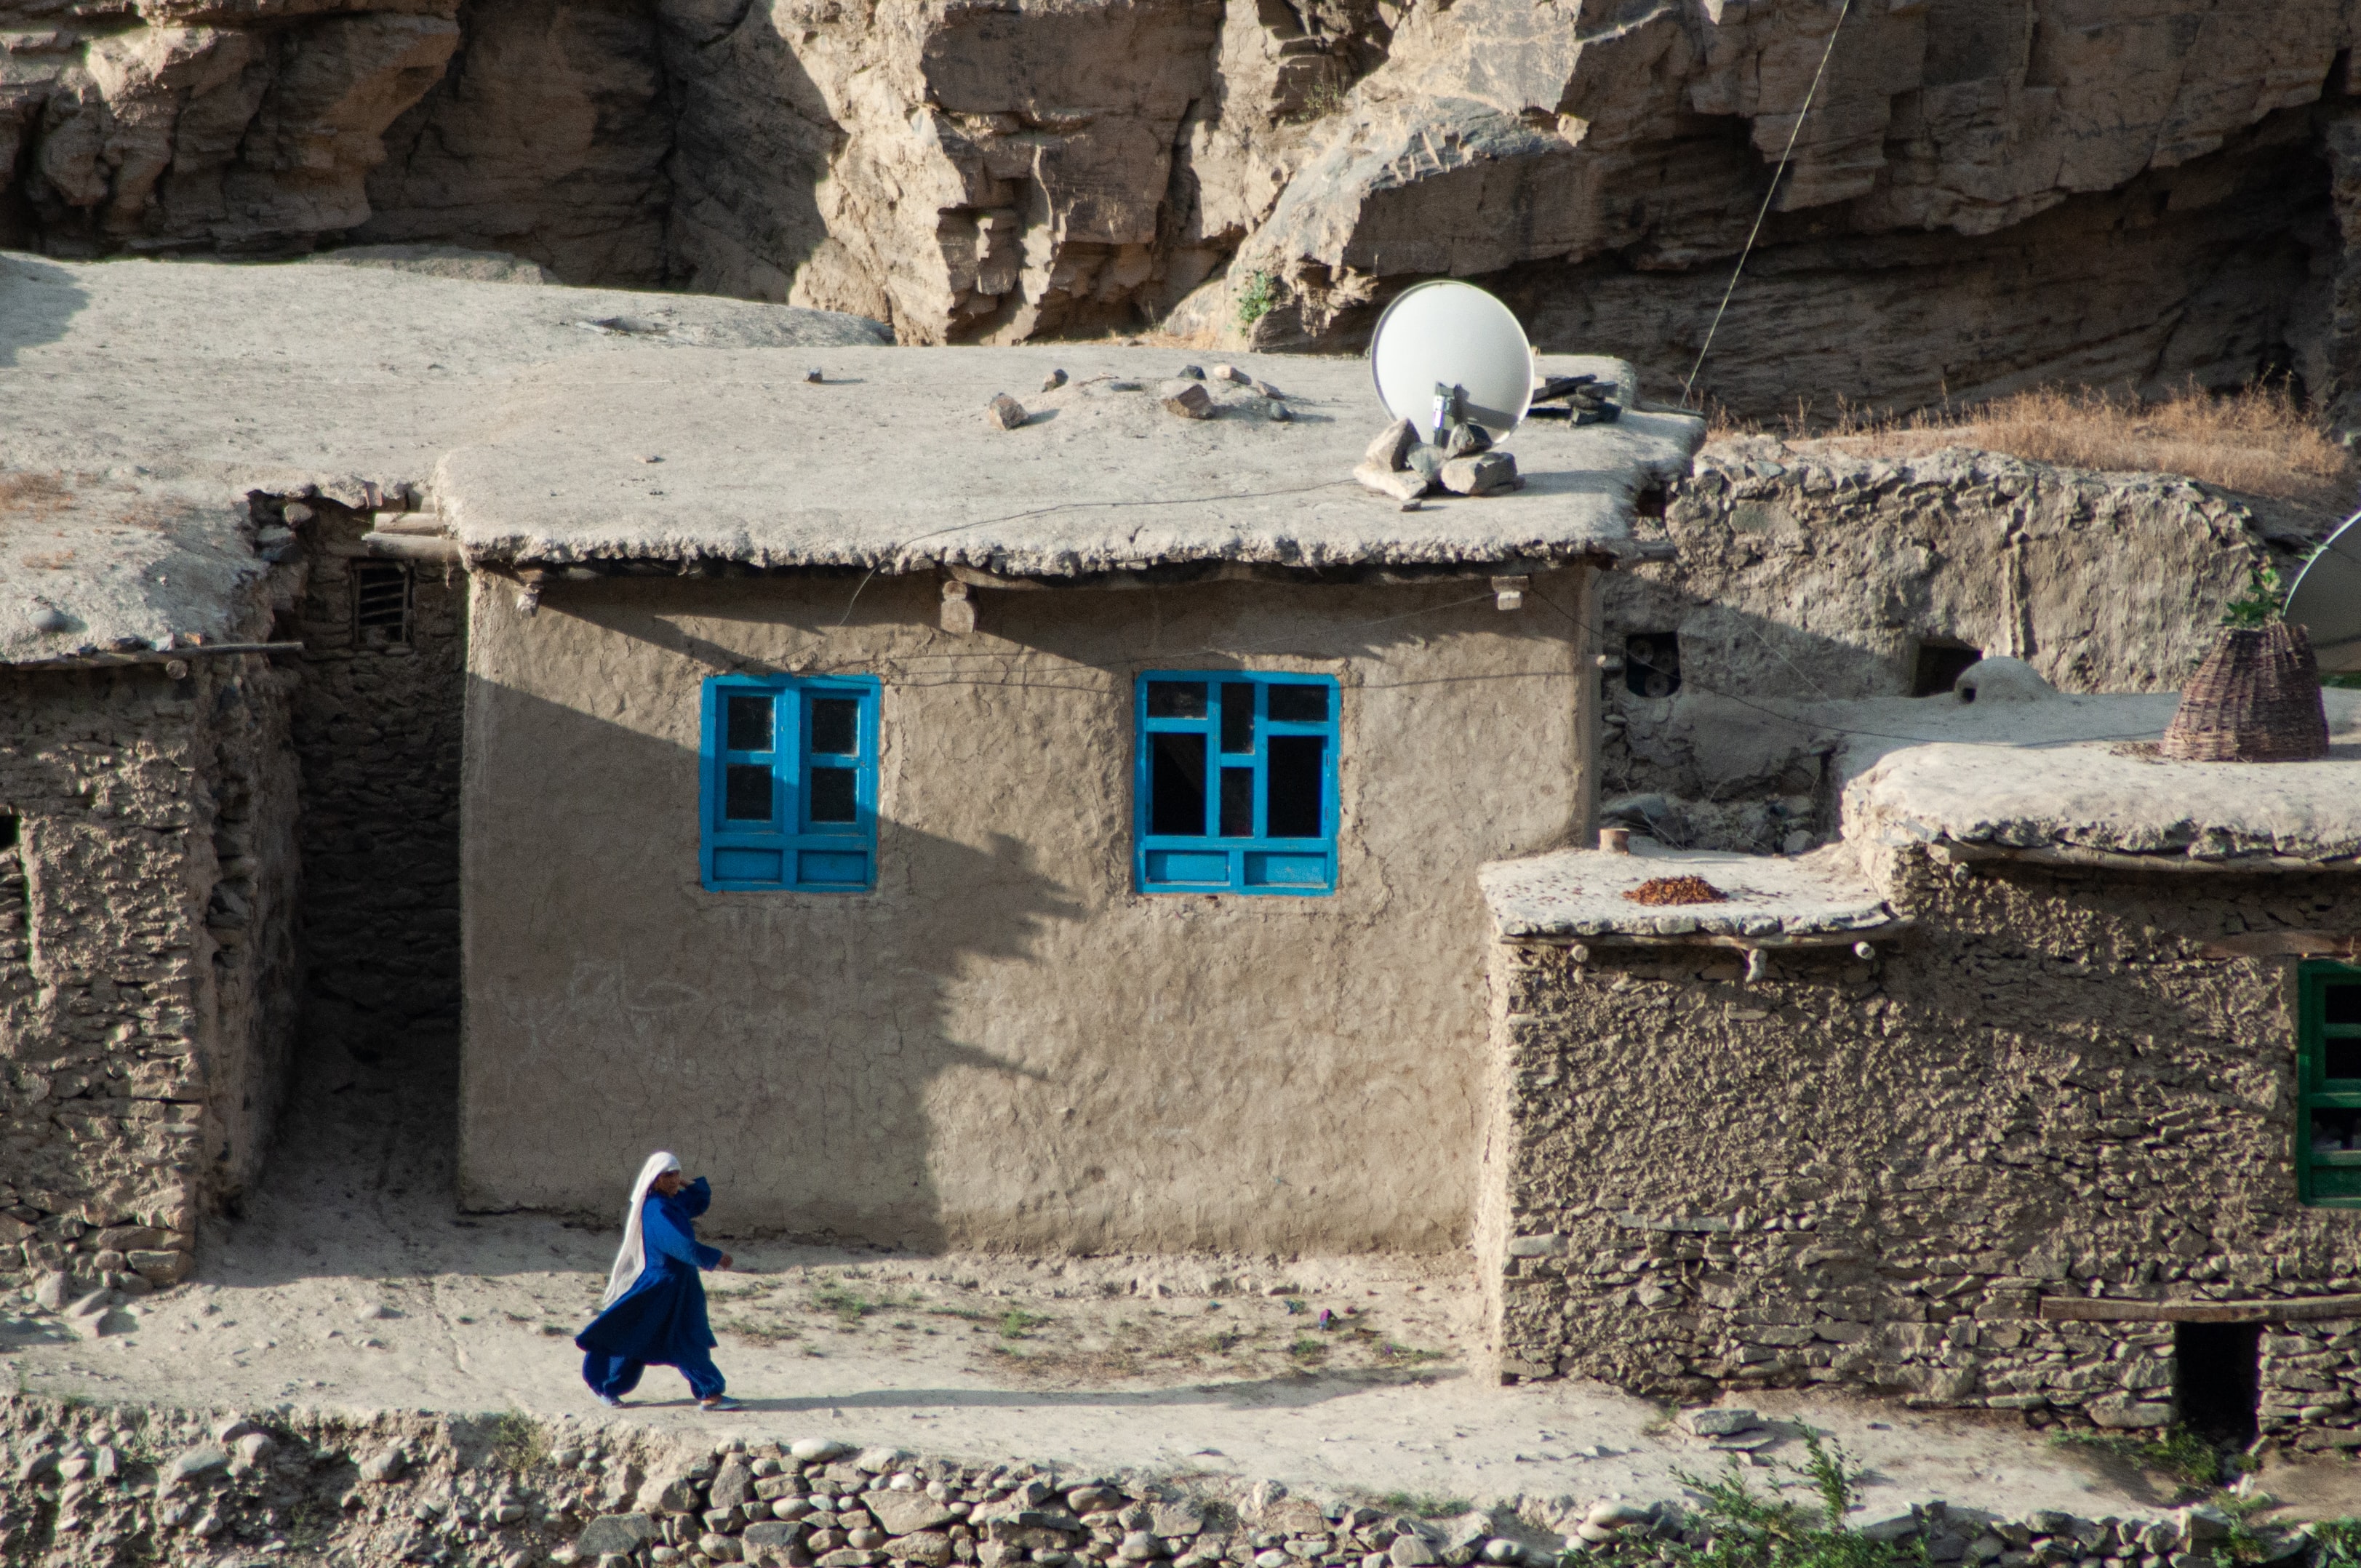 Badakhshan, Afghanistan; image by Joel Heard, via Unsplash.com.